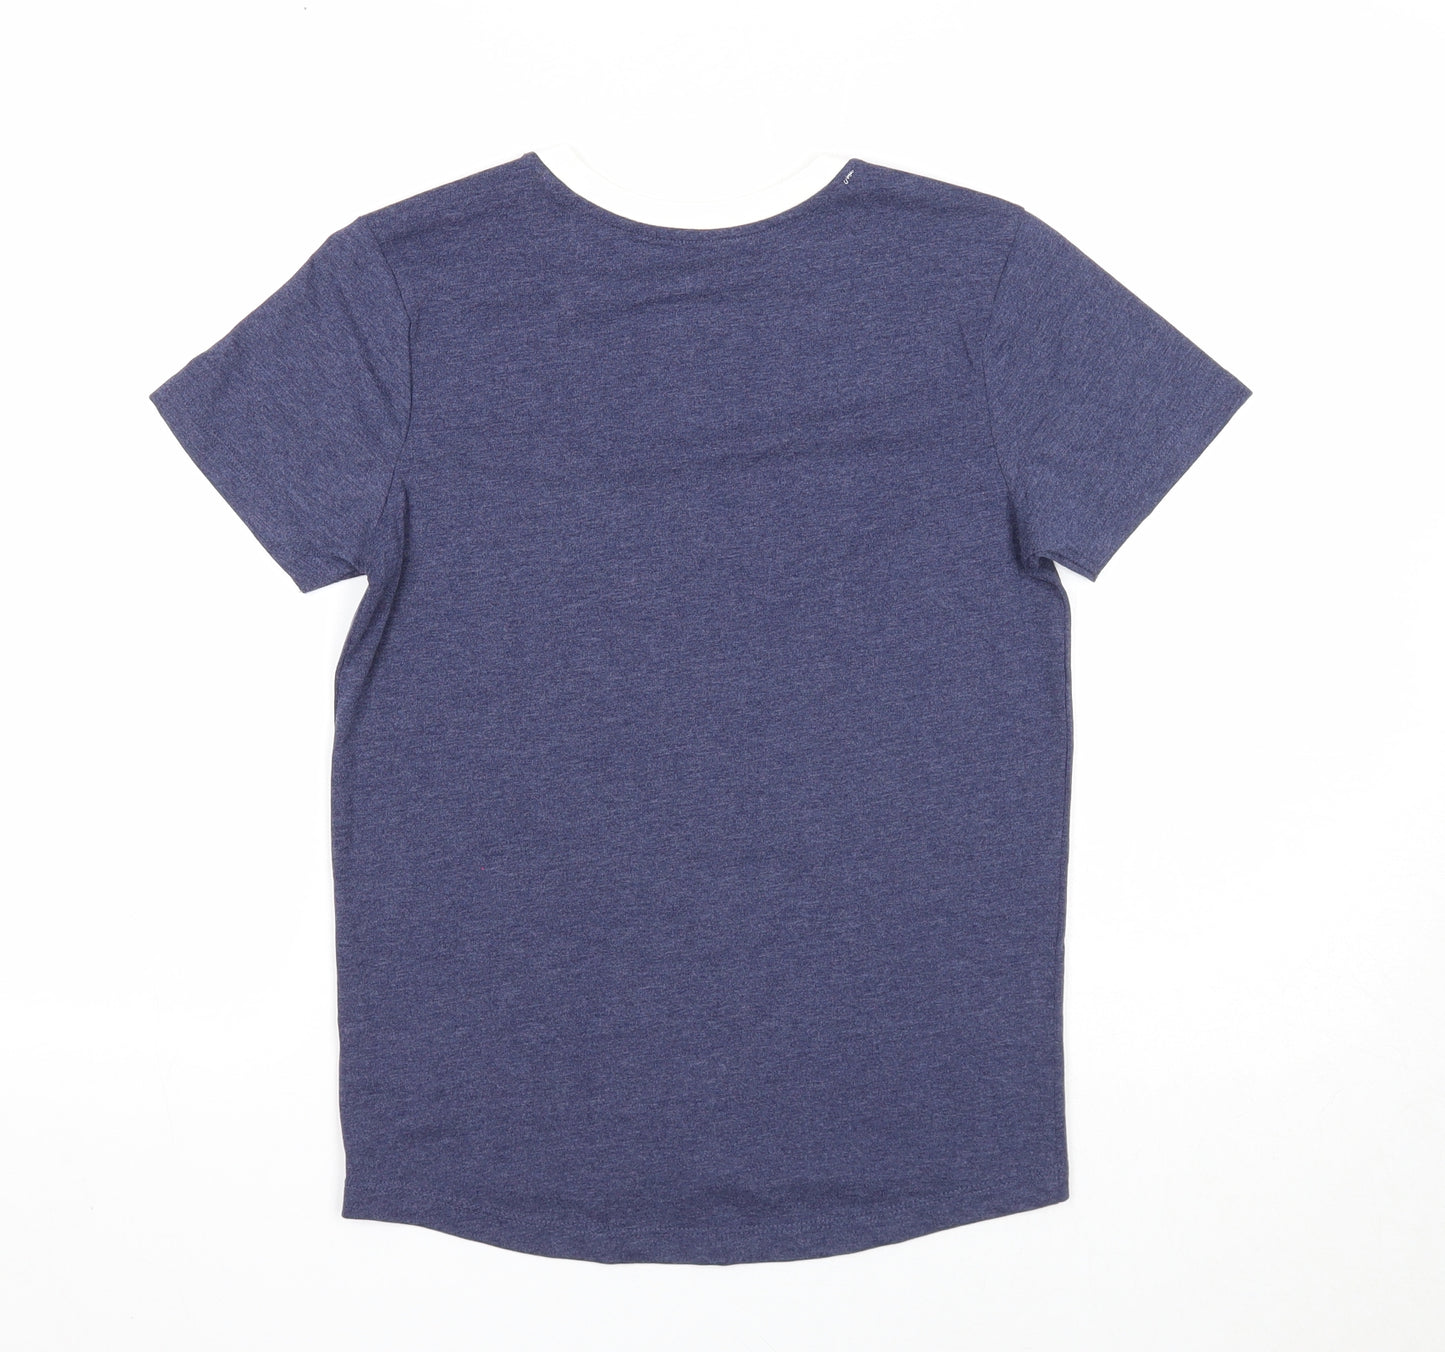 Nutmeg Boys Blue Cotton Basic T-Shirt Size 9-10 Years Round Neck Pullover